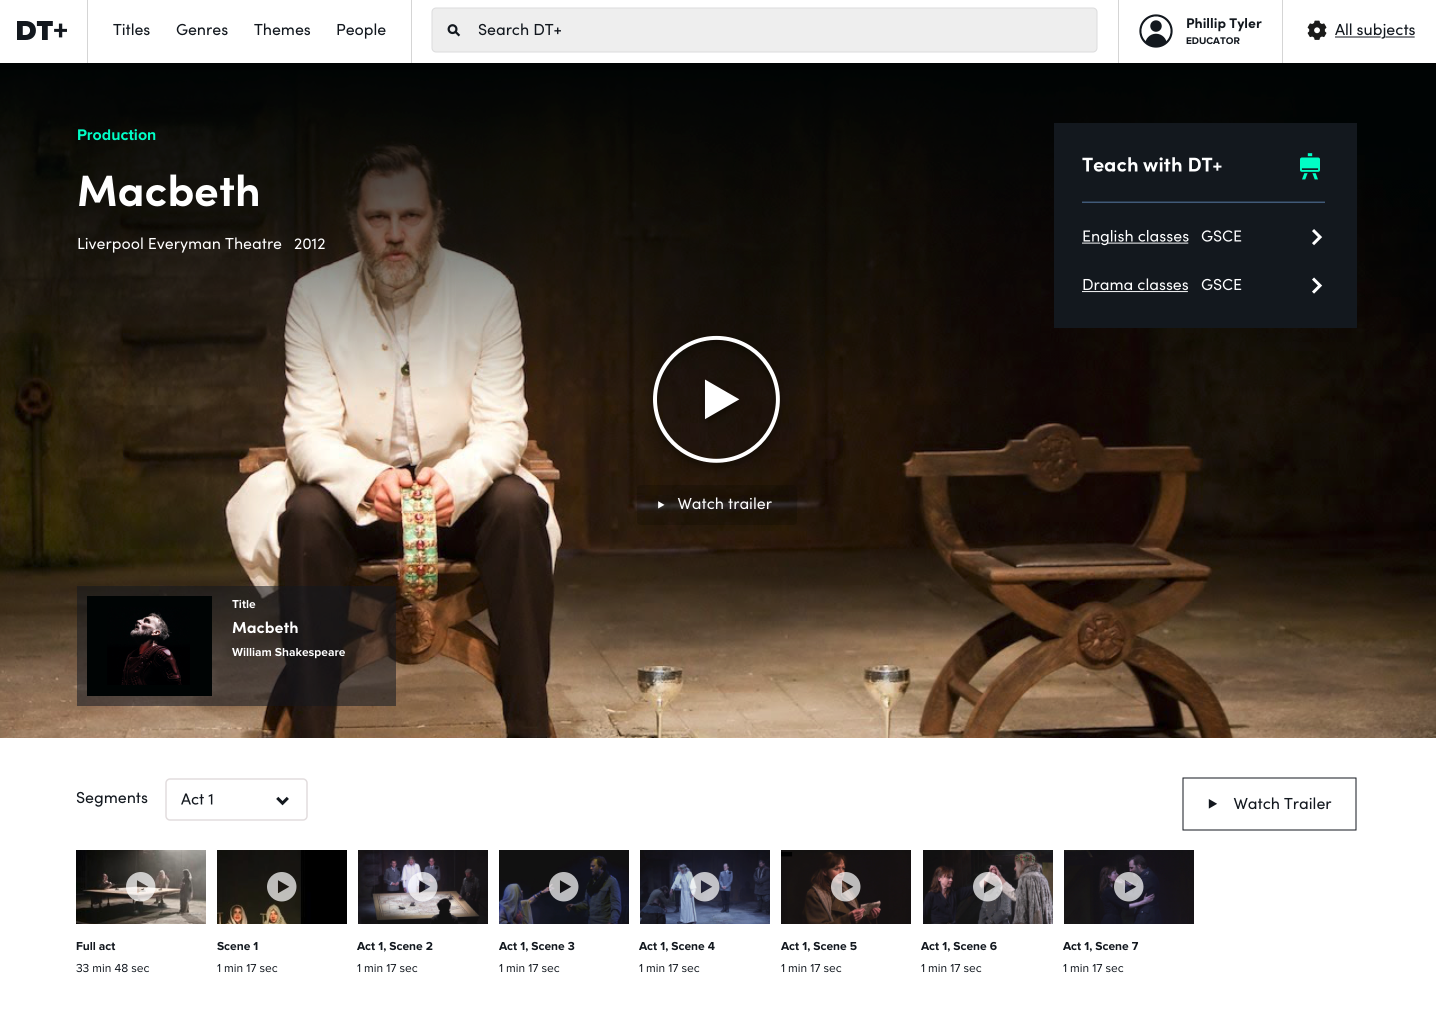 Macbeth page on Digital Theatre+